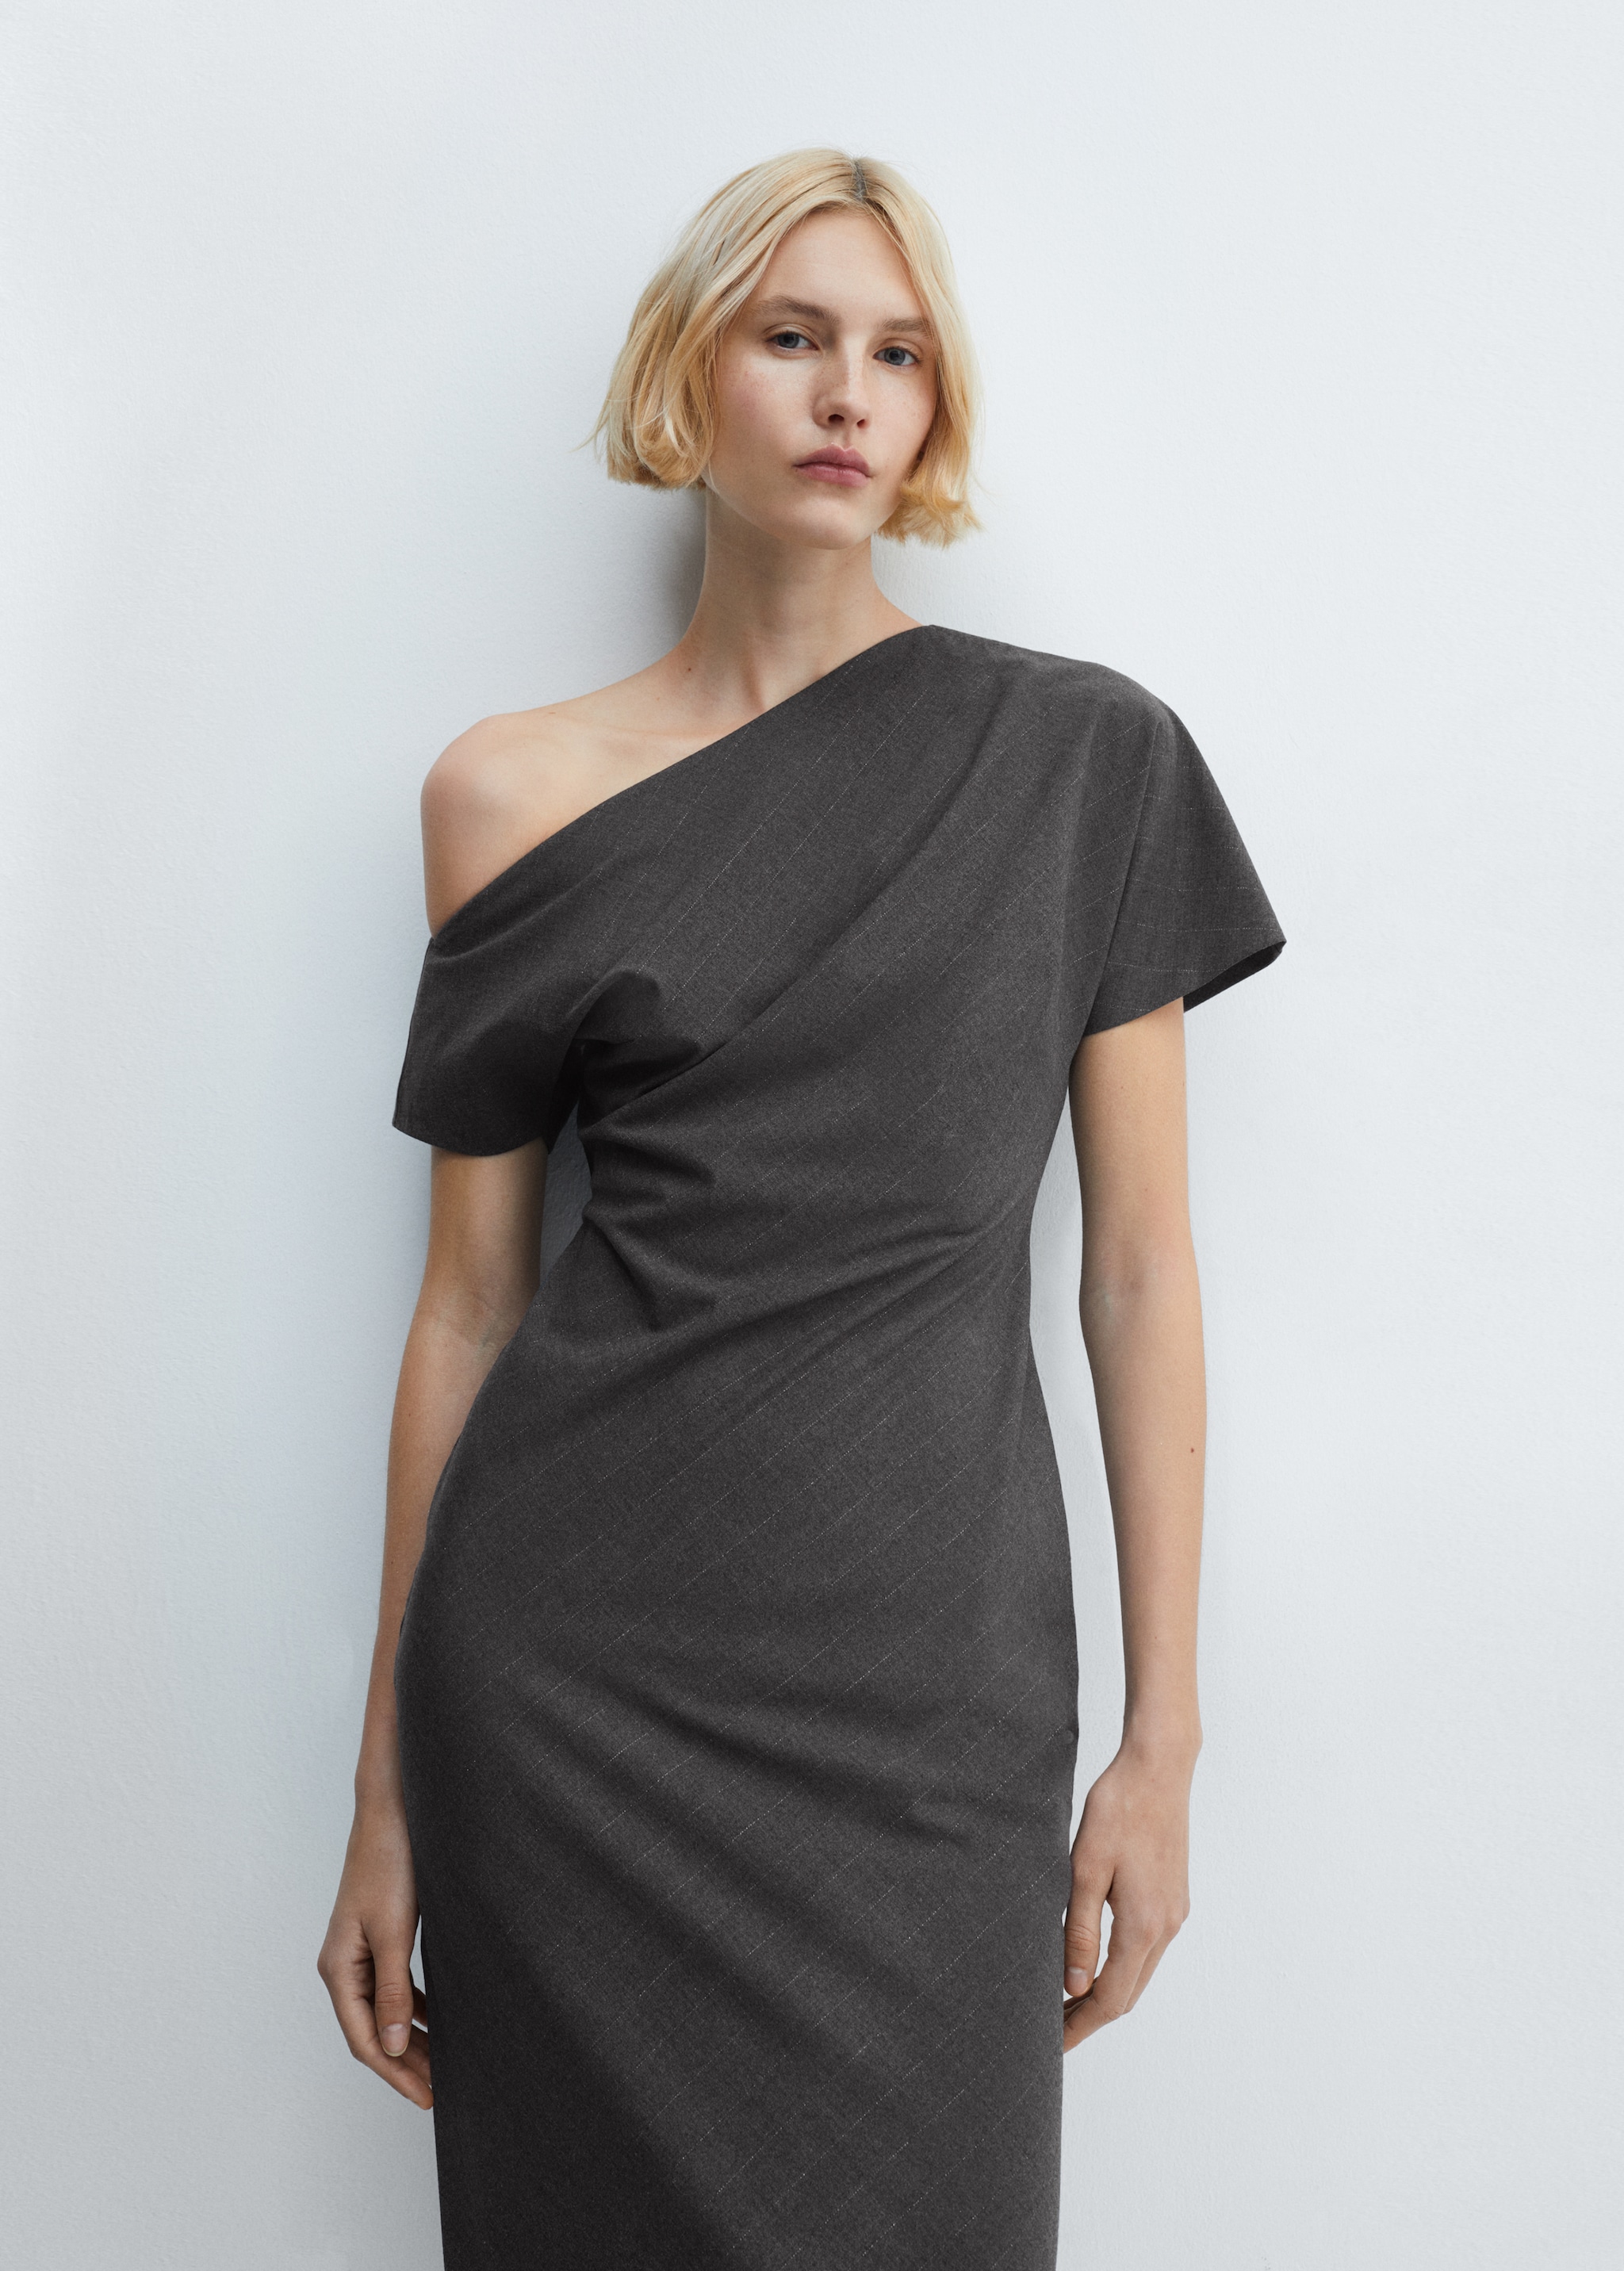 Asymmetrical dress with side slit - Medium plane